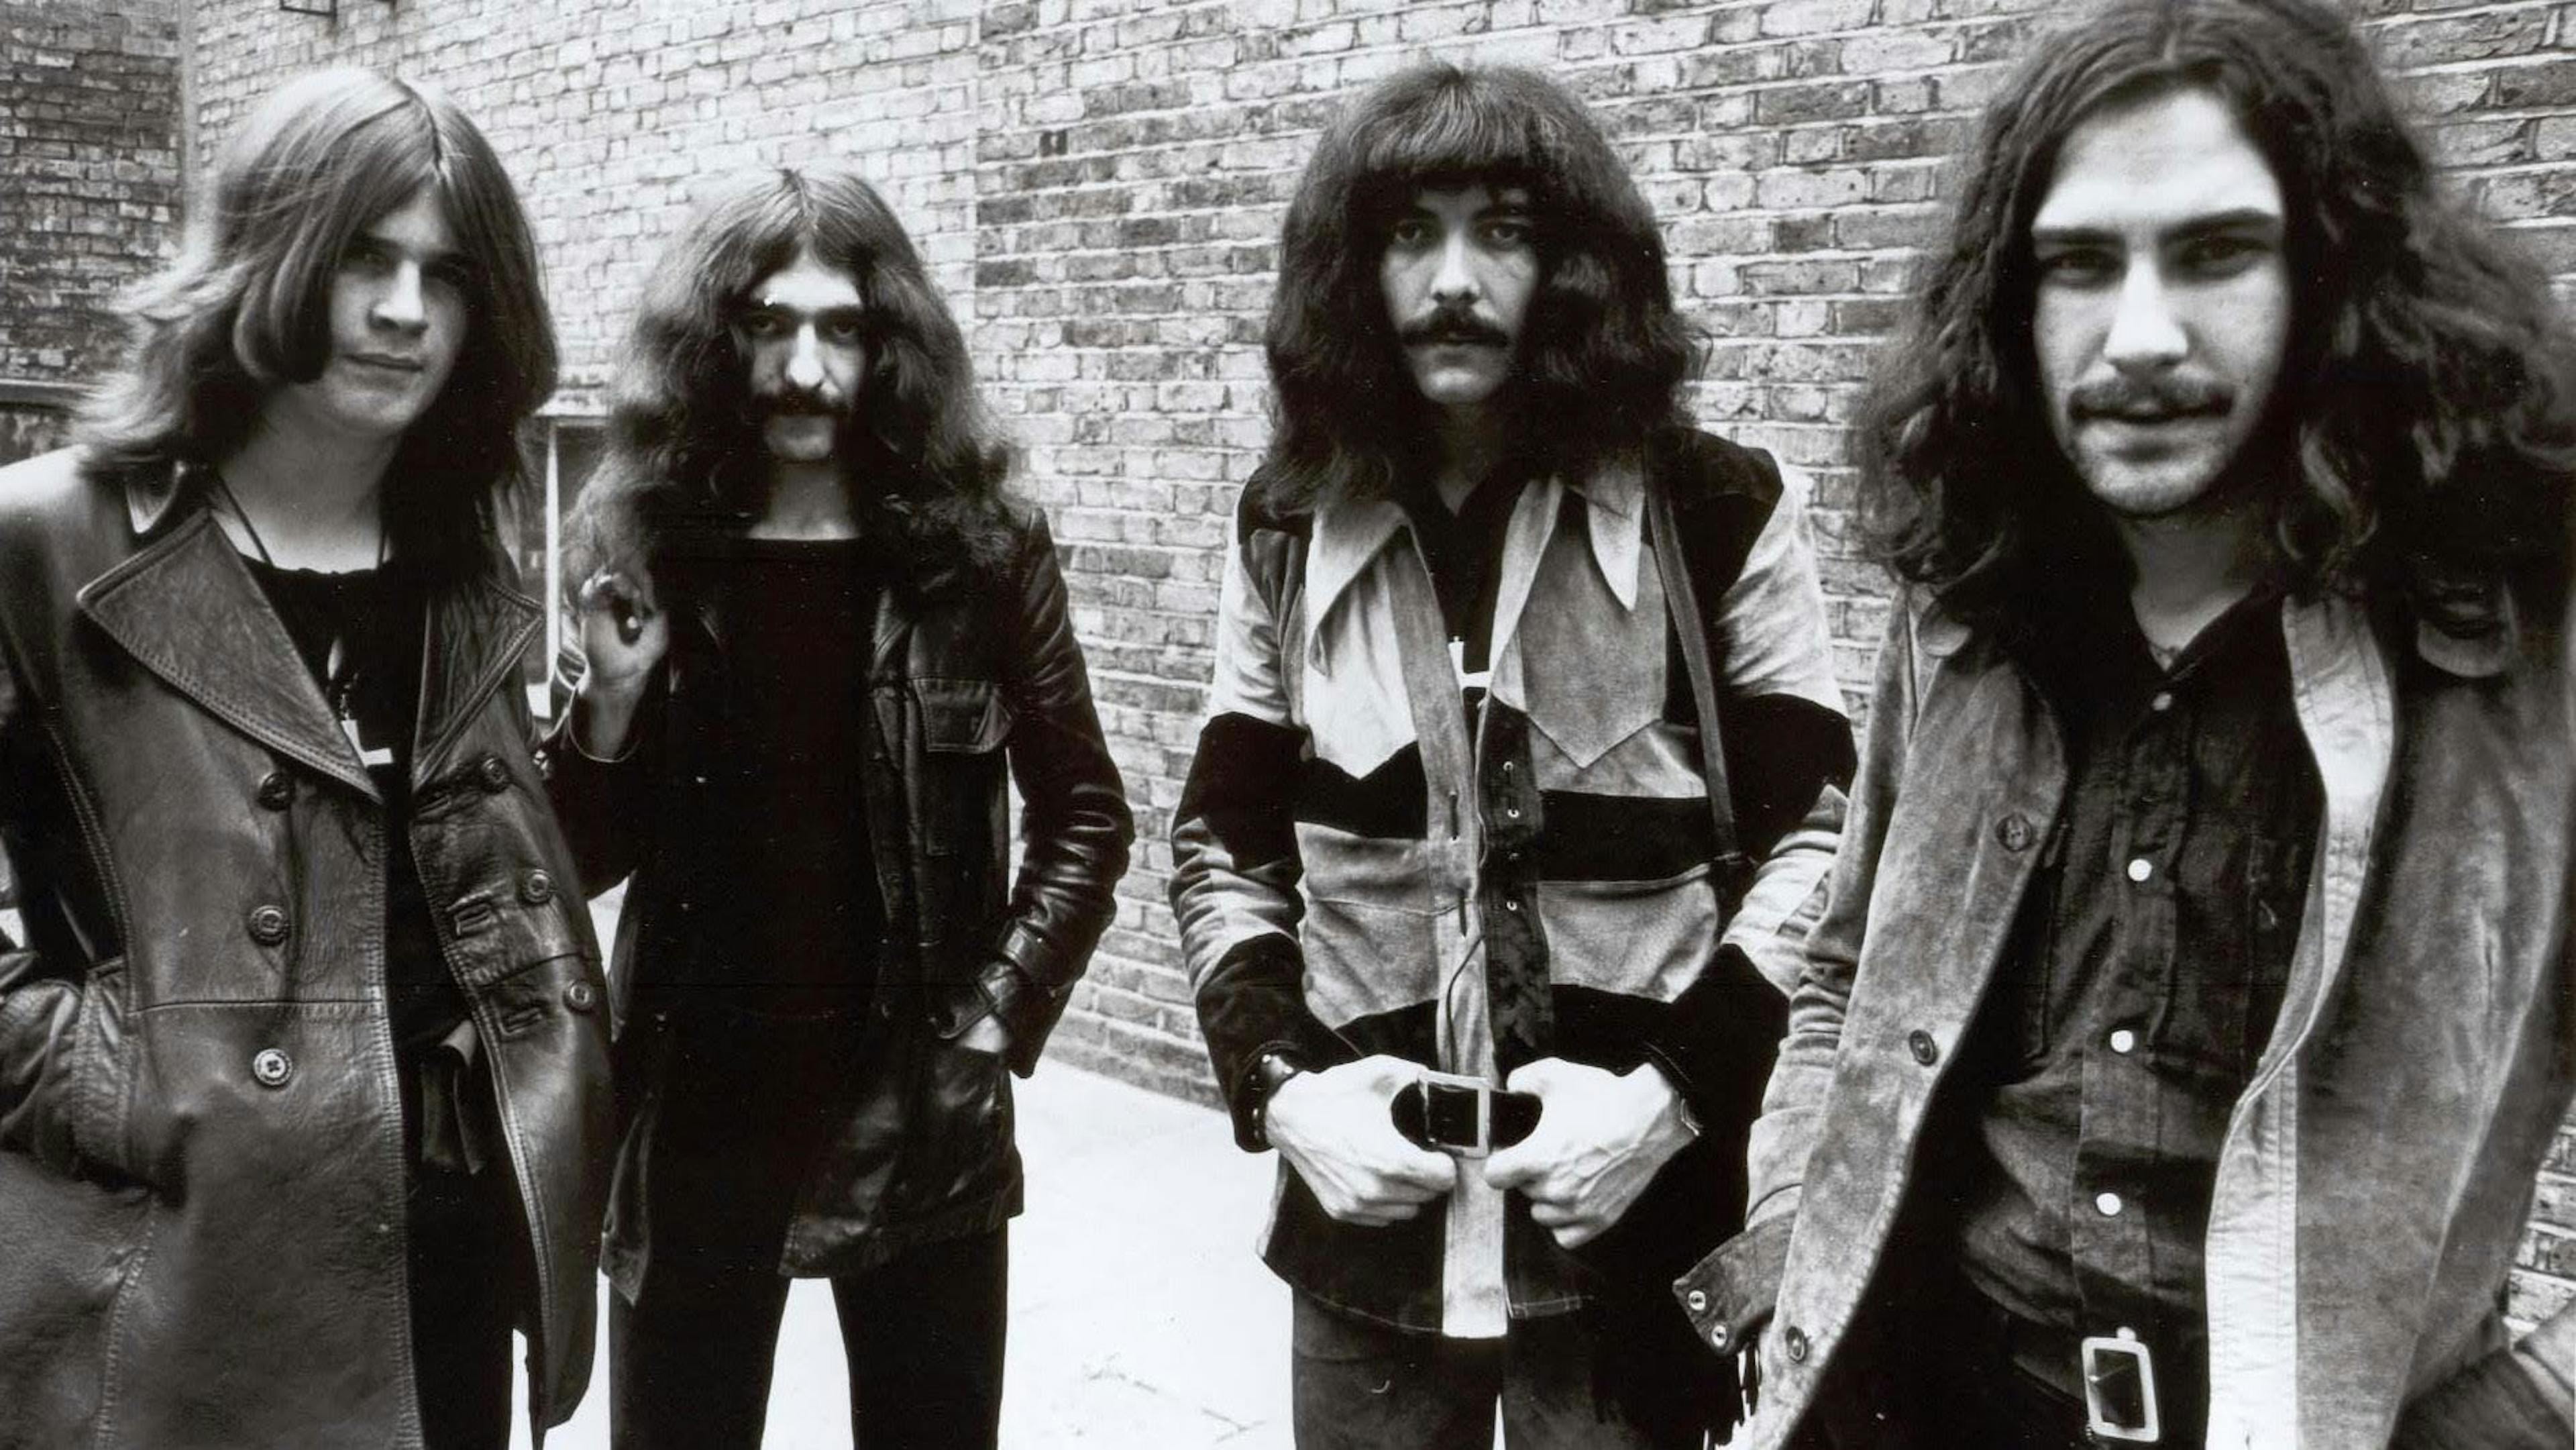 The story of Black Sabbath, as told through their singles